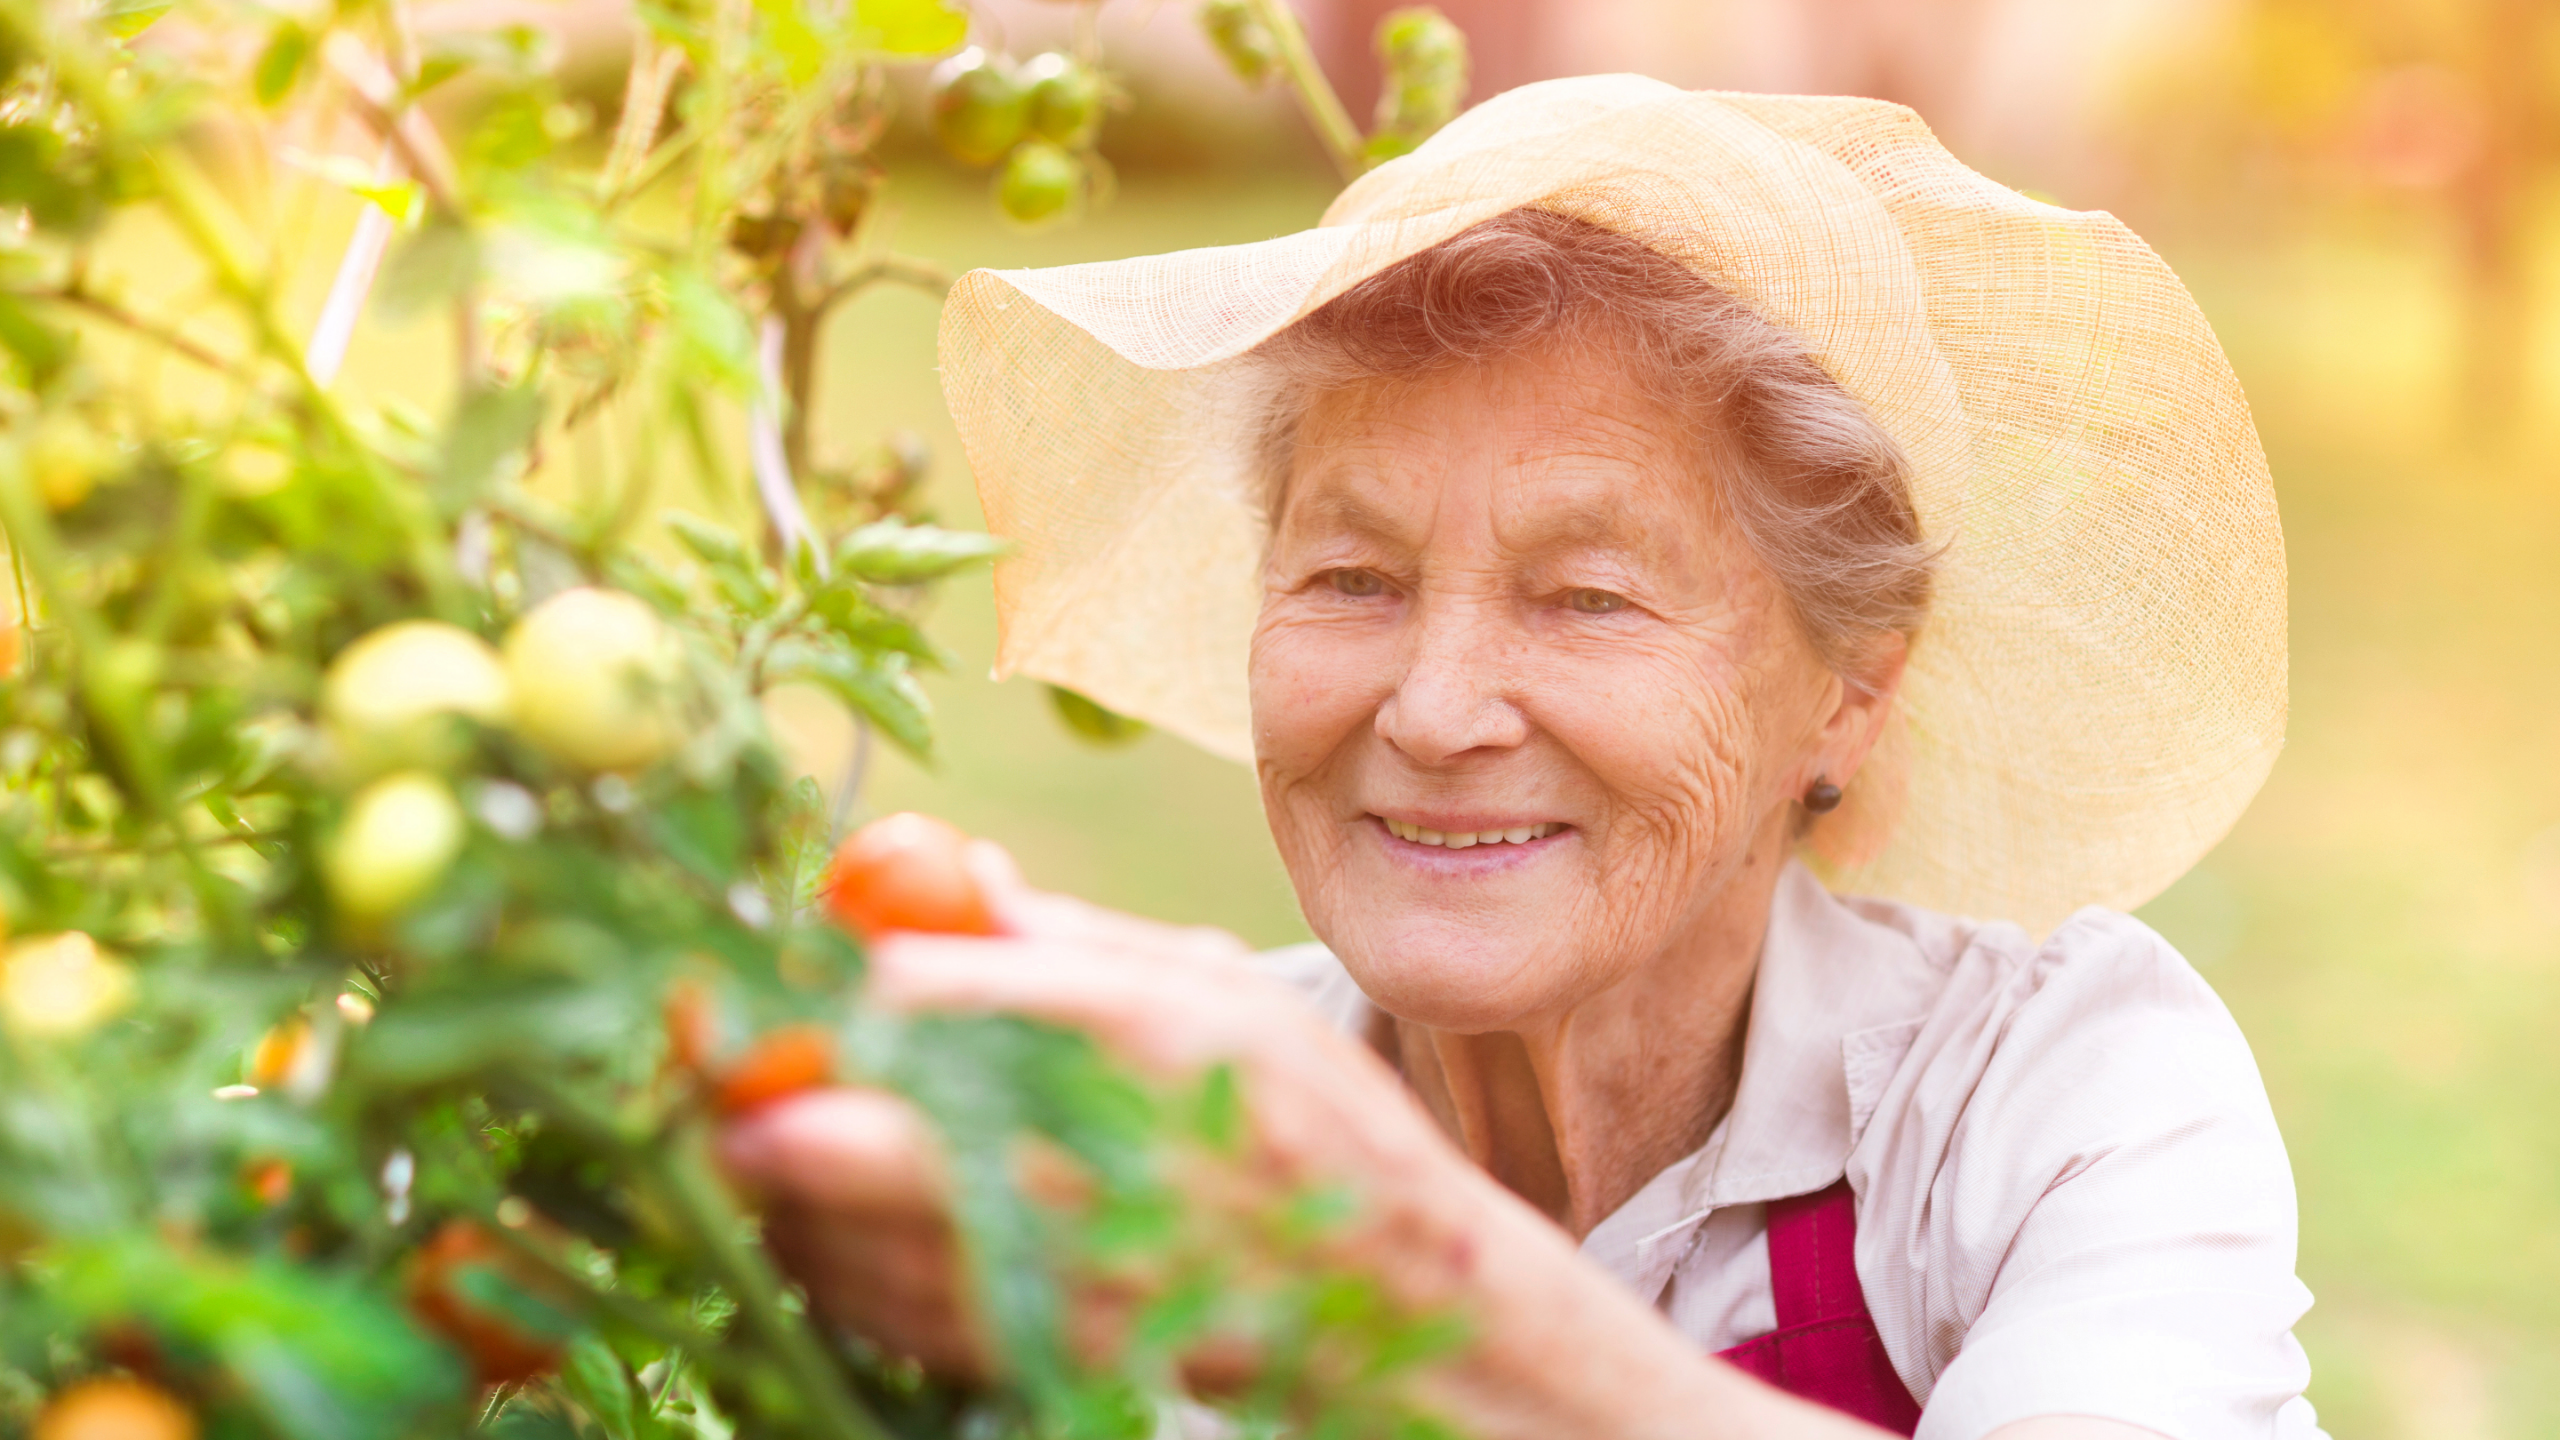 Elderly lady in garden picking tomatoes